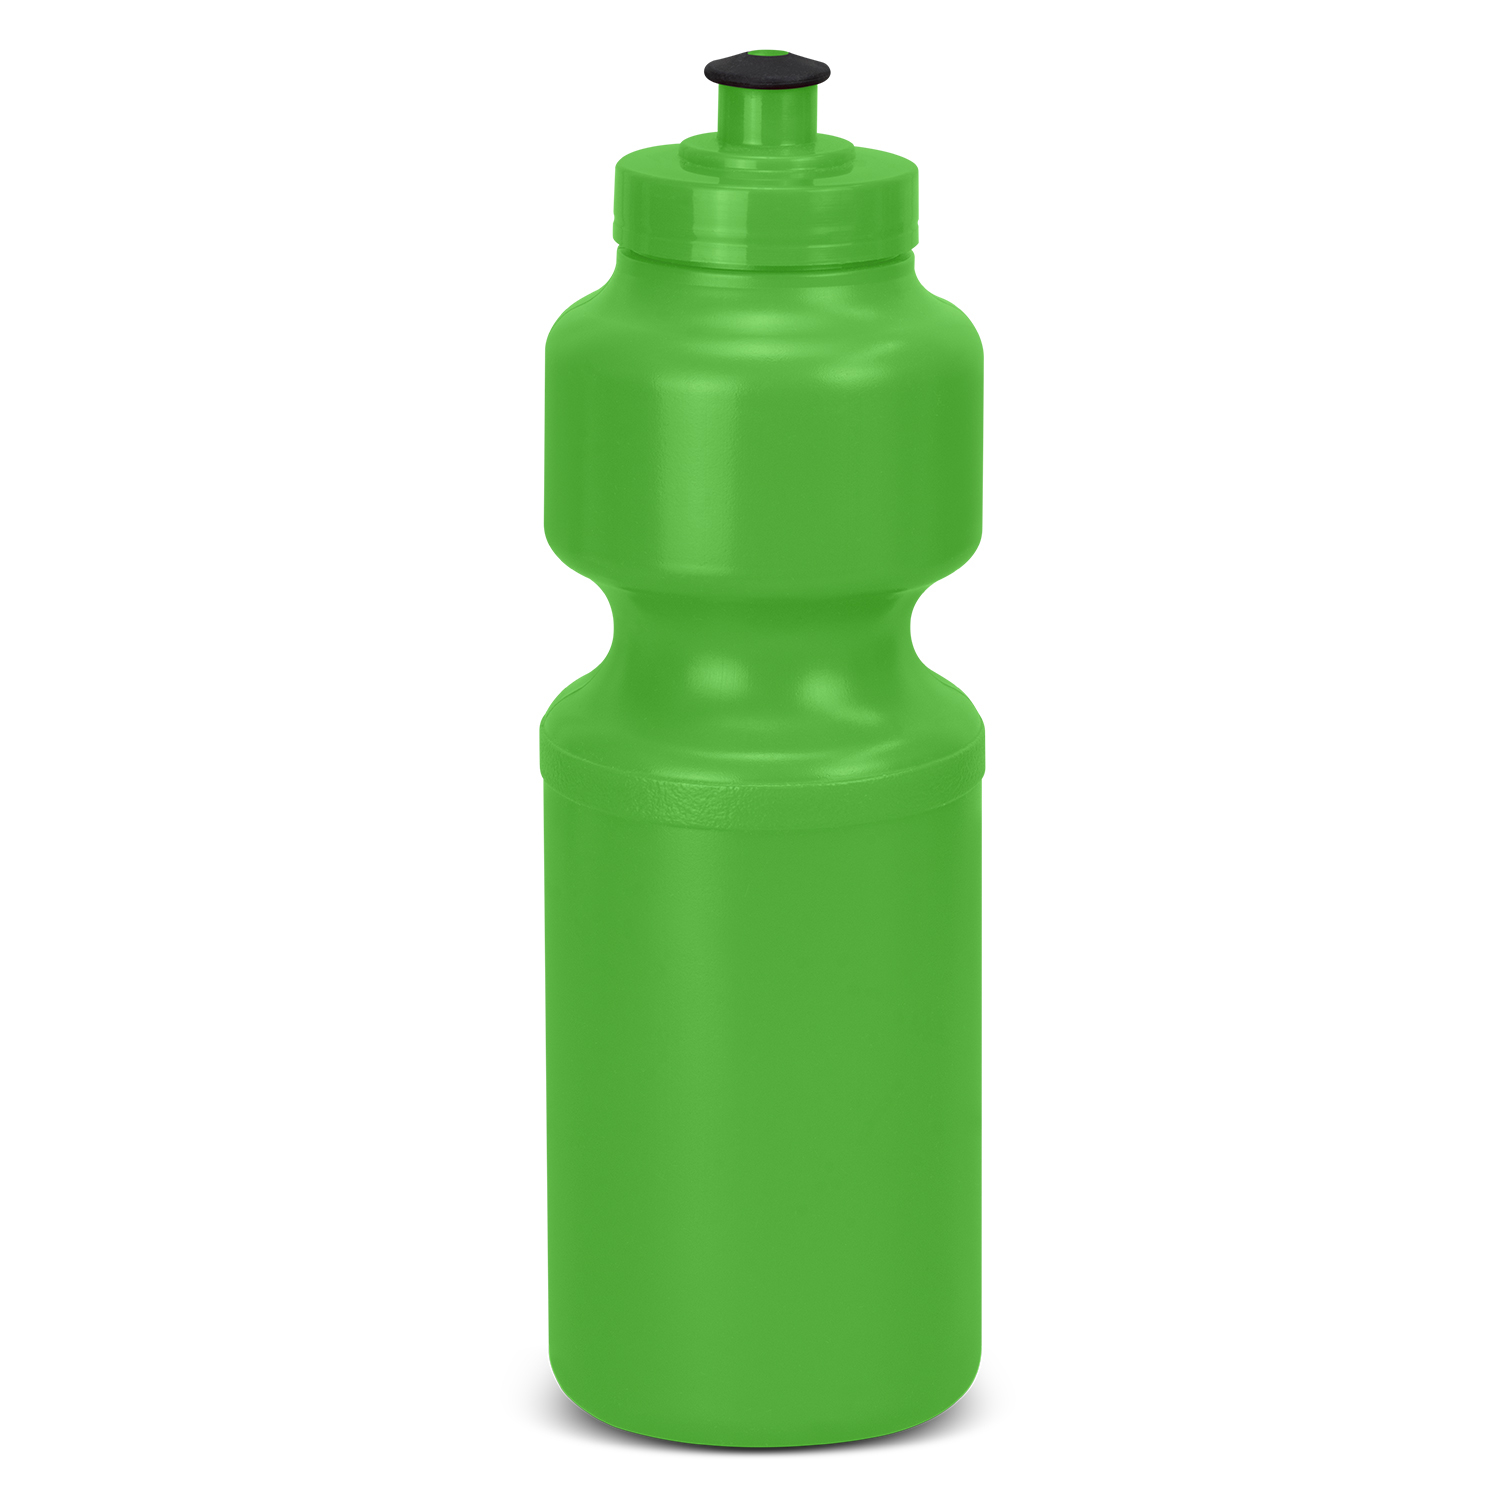 Quencher Bottle 126702 | Bright Green